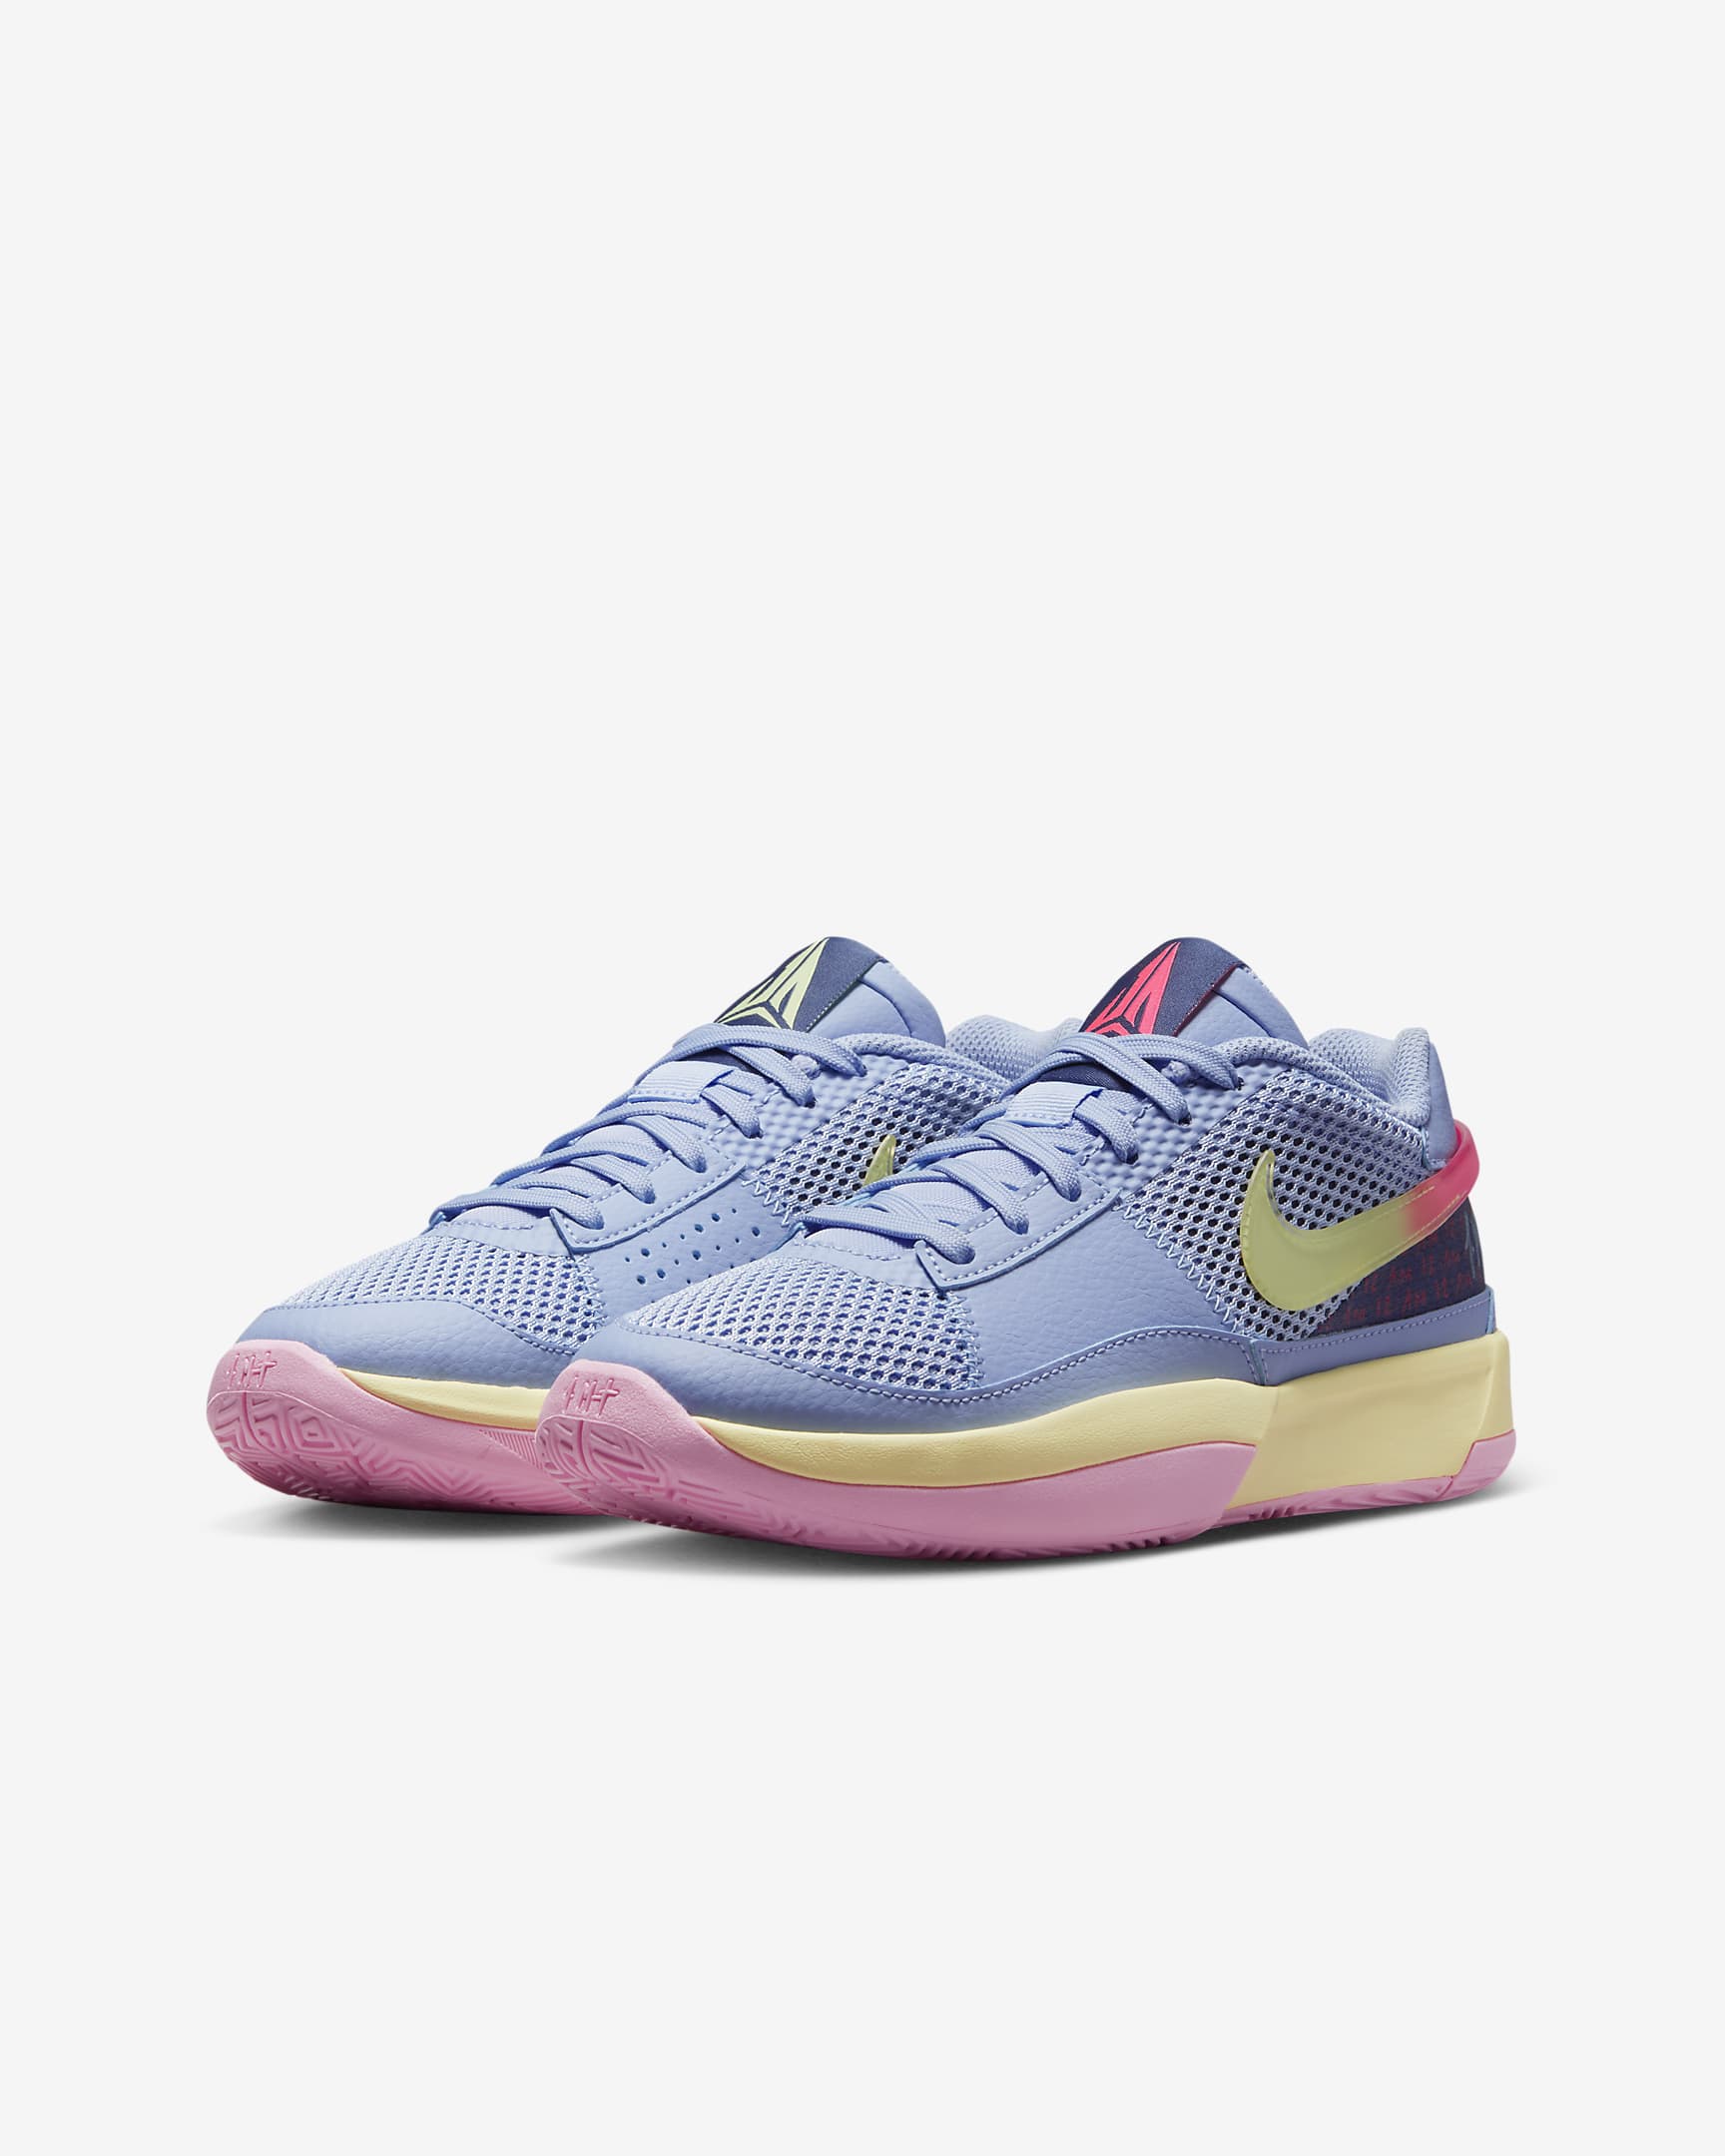 Ja 1 Older Kids' Basketball Shoes. Nike ID